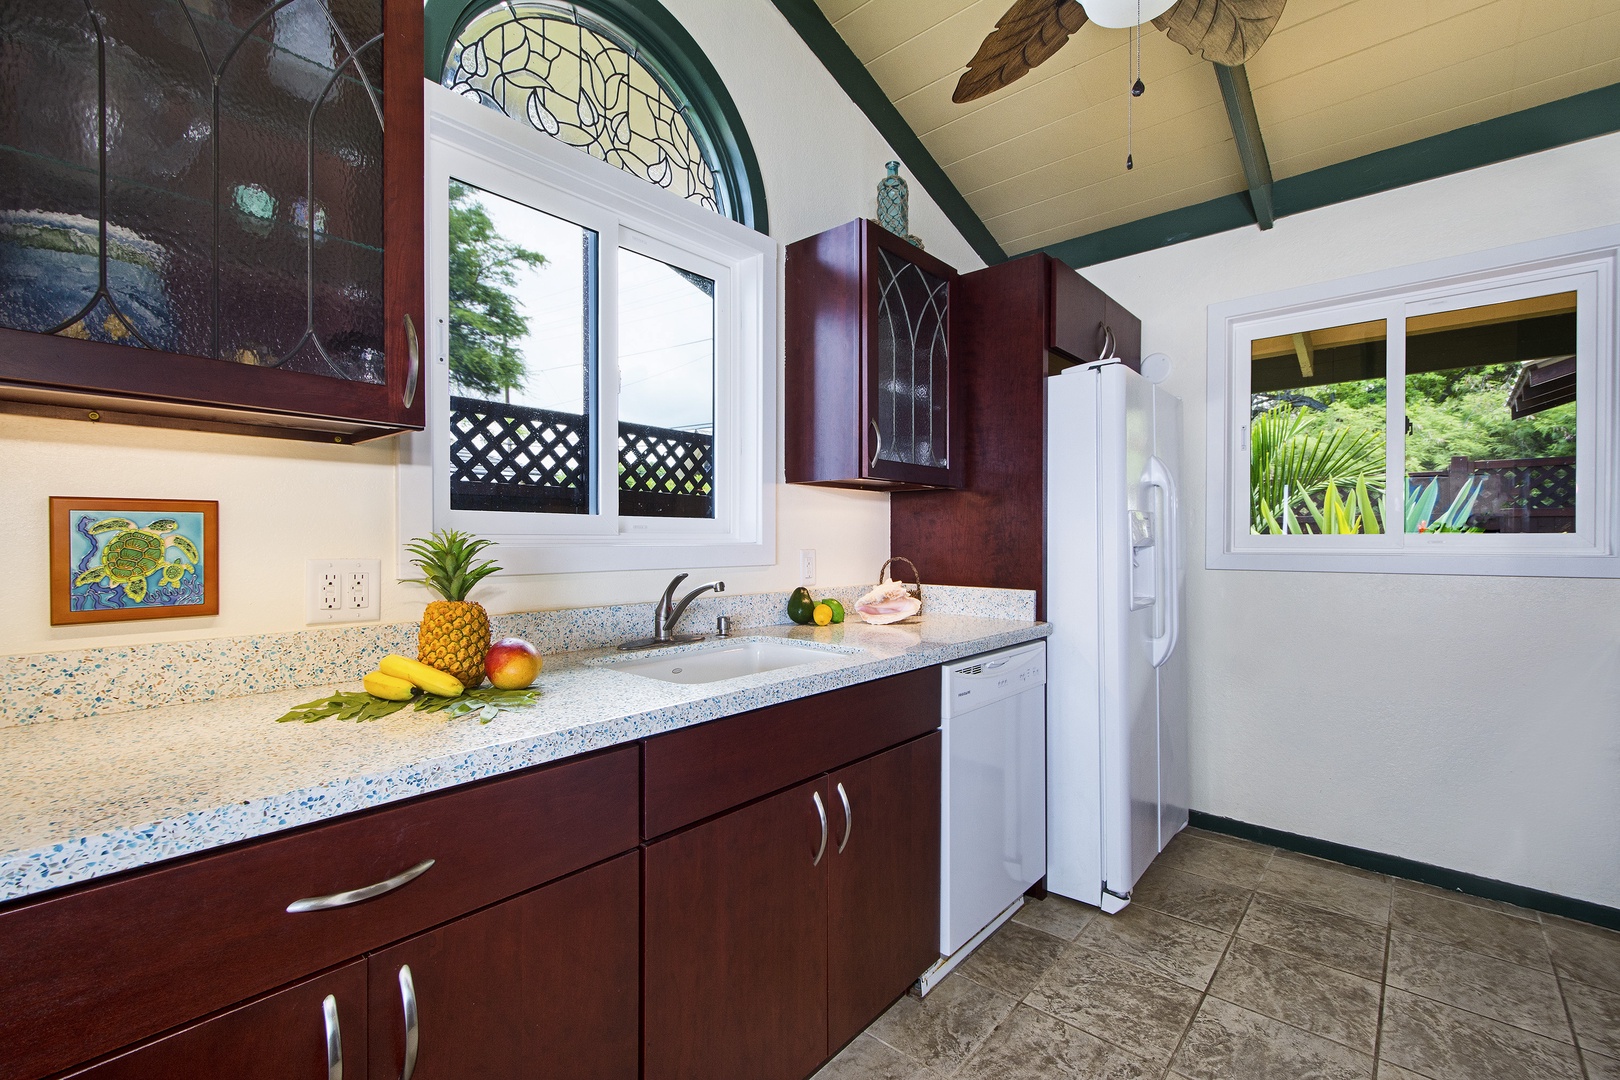 Kailua Kona Vacation Rentals, The Cottage - Newly Remodeled Kitchen